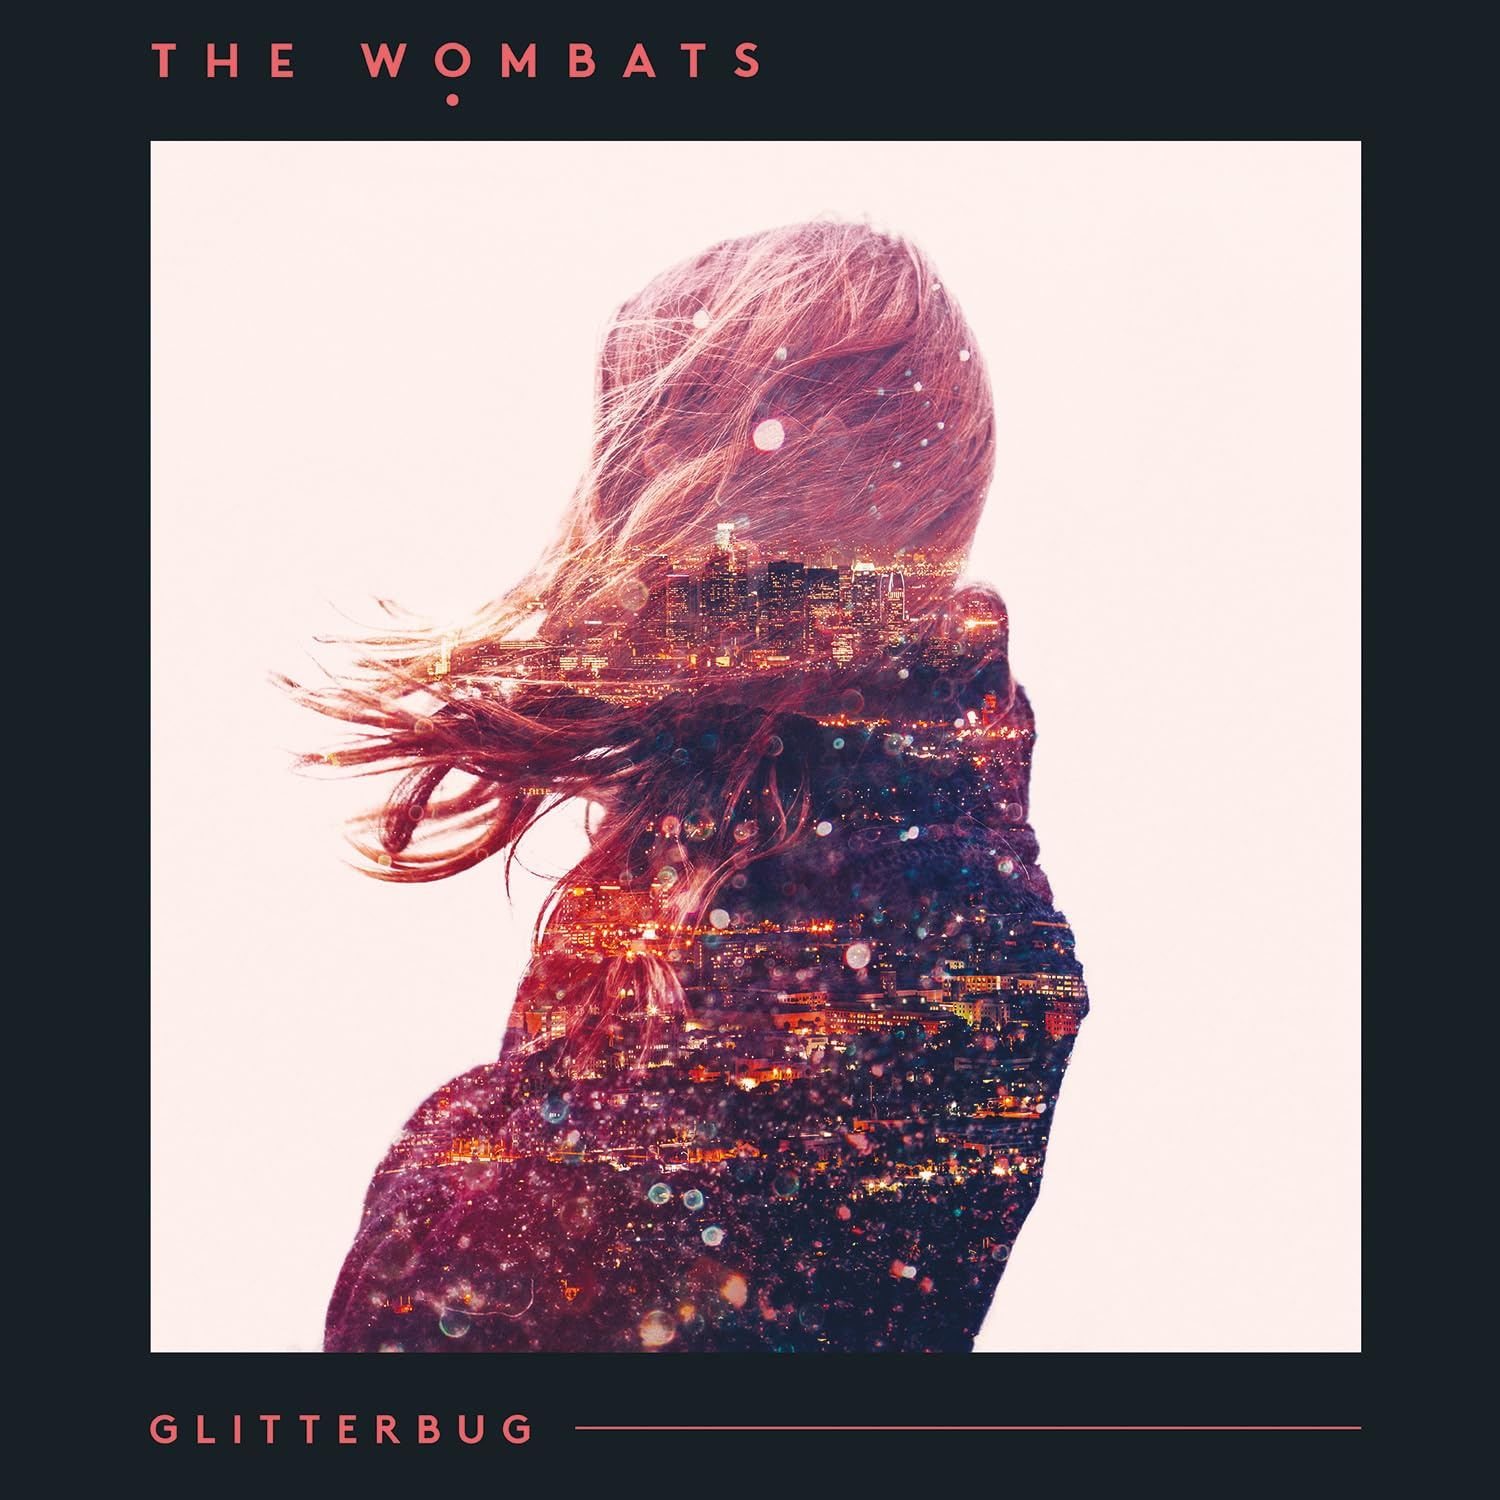 The Wombats - Glitterbug vinyl cover